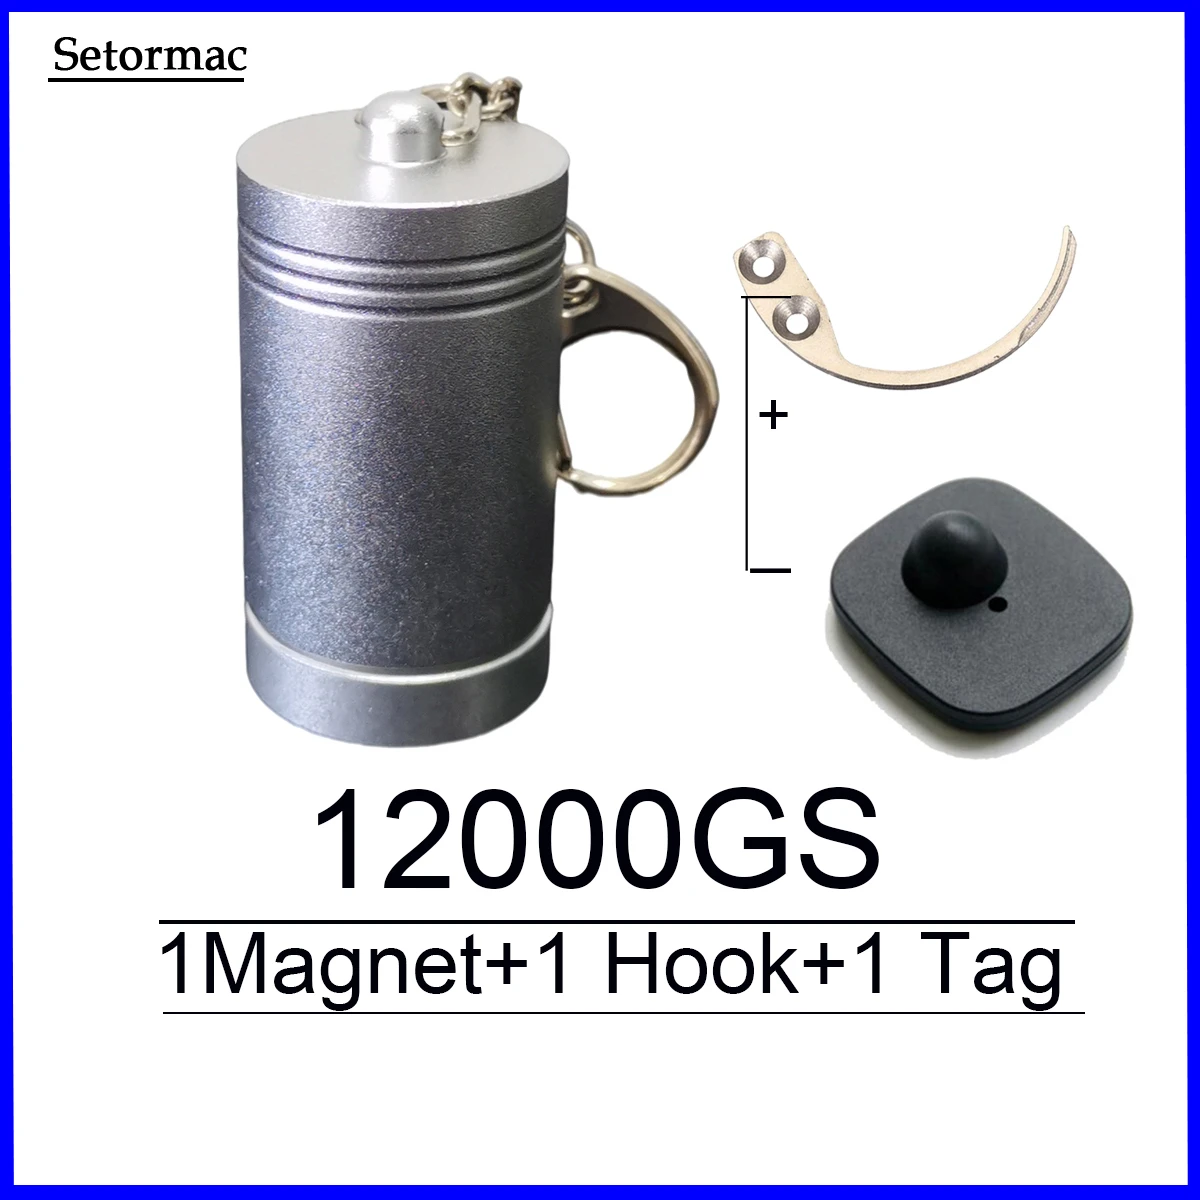 Tag Remover Magnet 12000GS Portable Security Tag Detacher+1Detacher Hook Tag Removal +1Sensor alarm siren